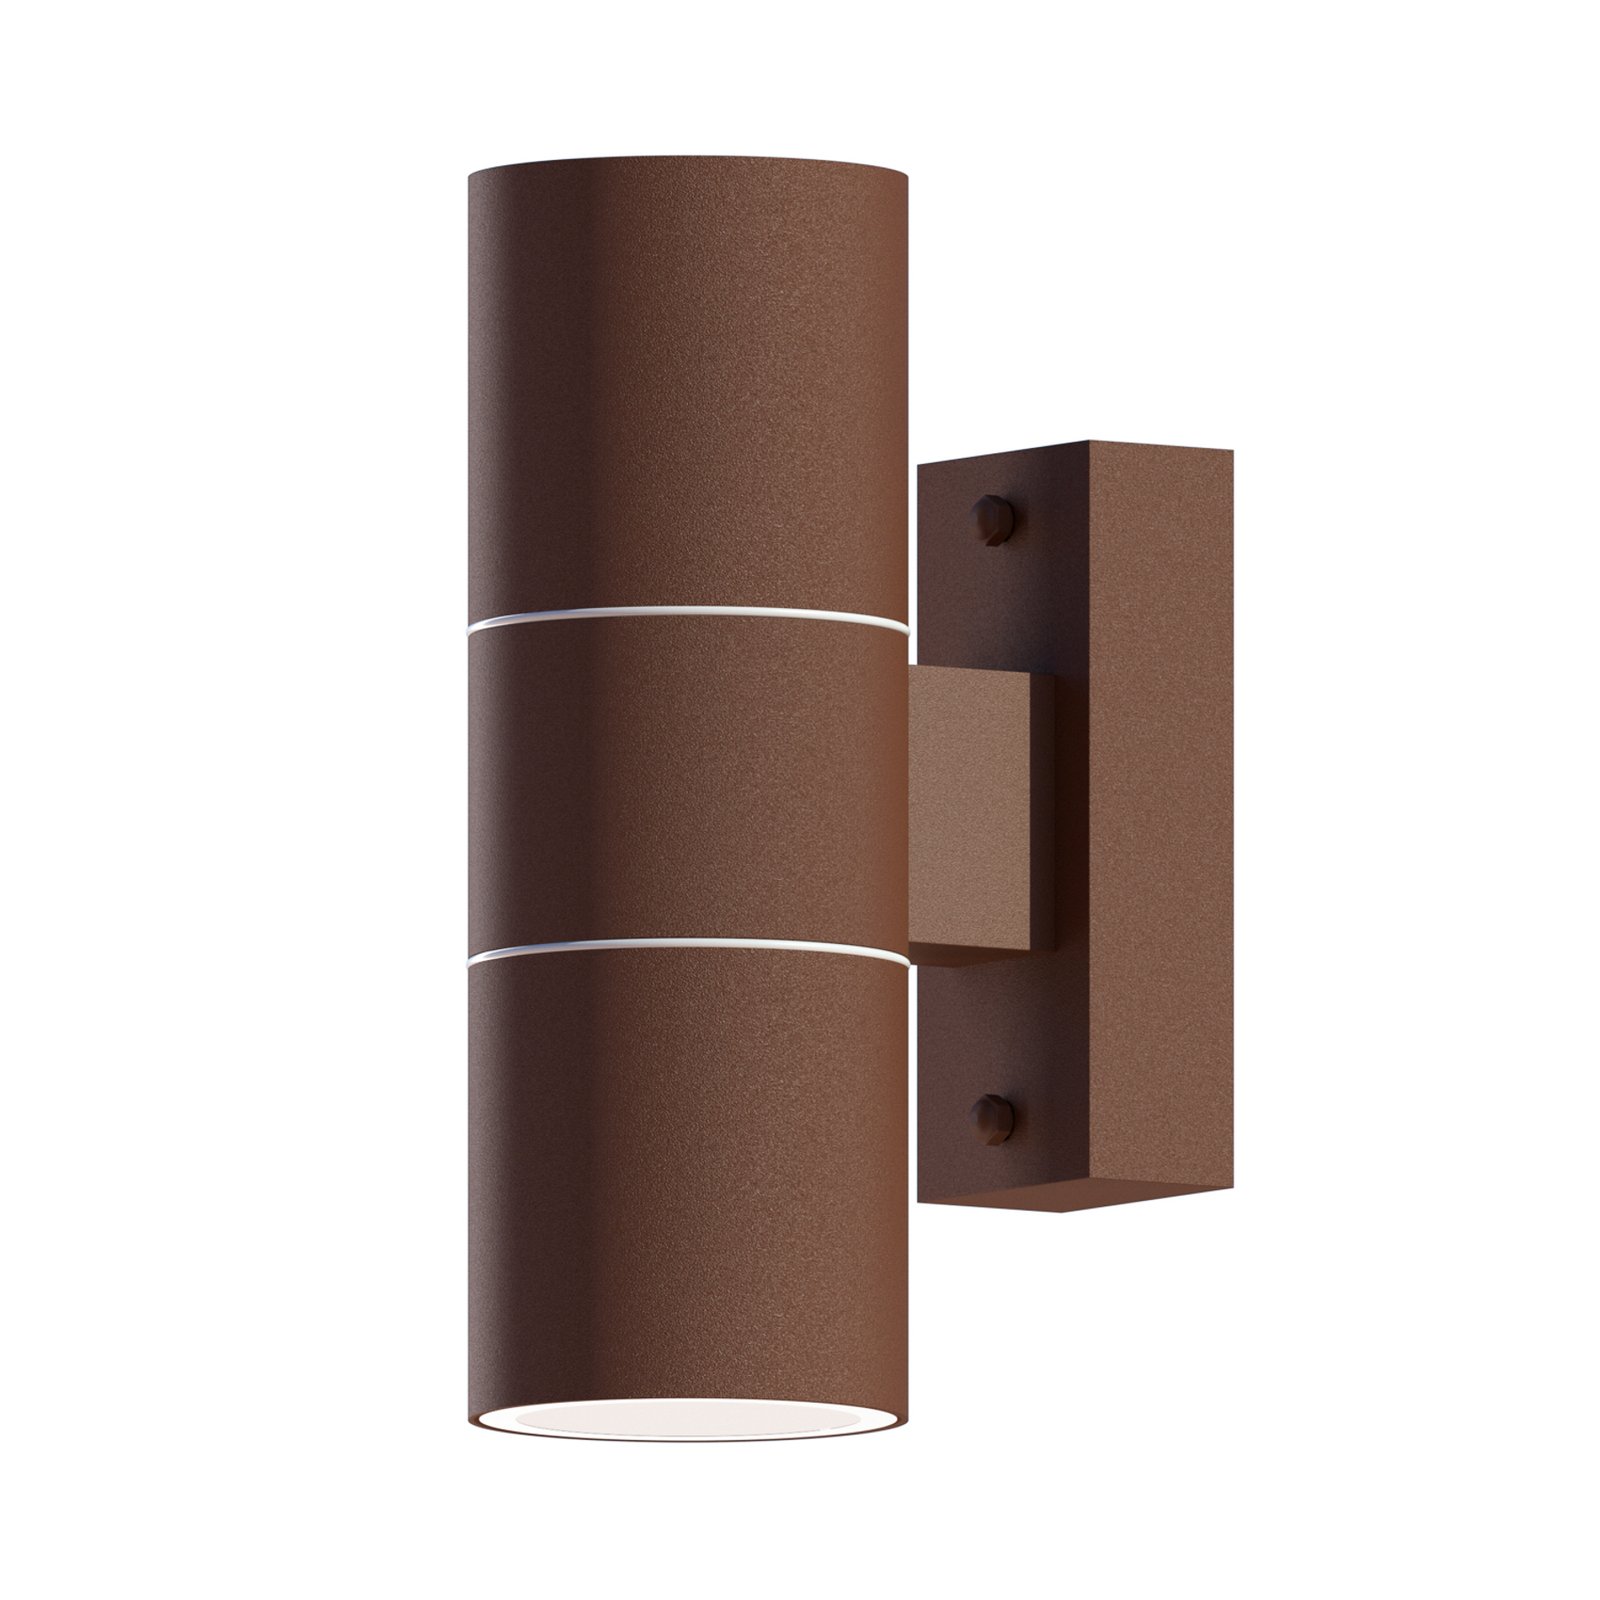 Calex outdoor wall lamp GU10 stainless steel up/down 17 cm, rust brown